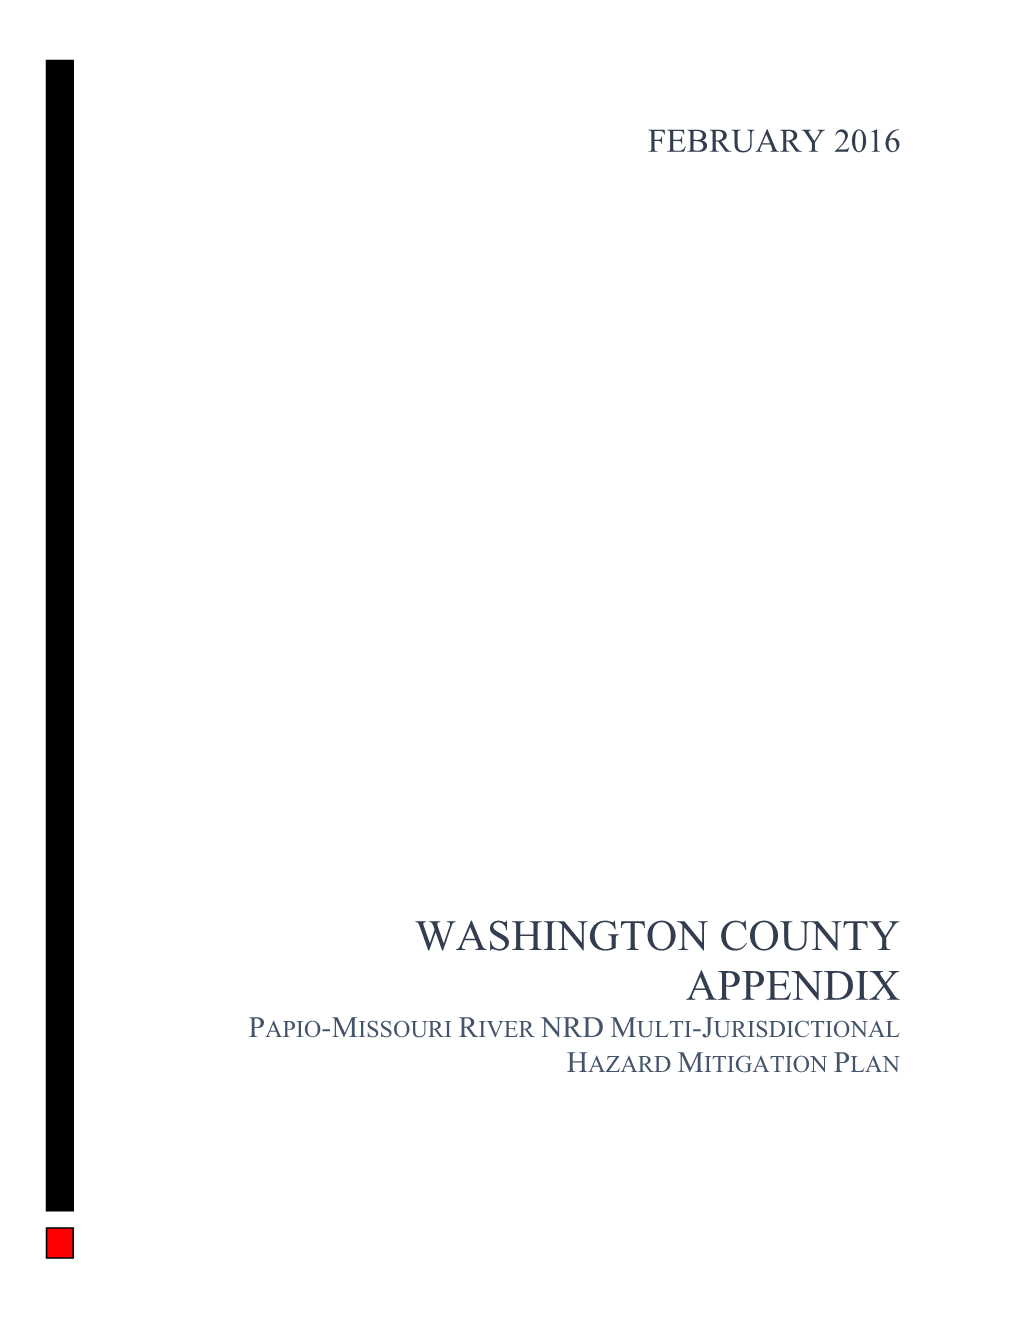 Washington County Appendix Papio-Missouri River Nrd Multi-Jurisdictional Hazard Mitigation Plan